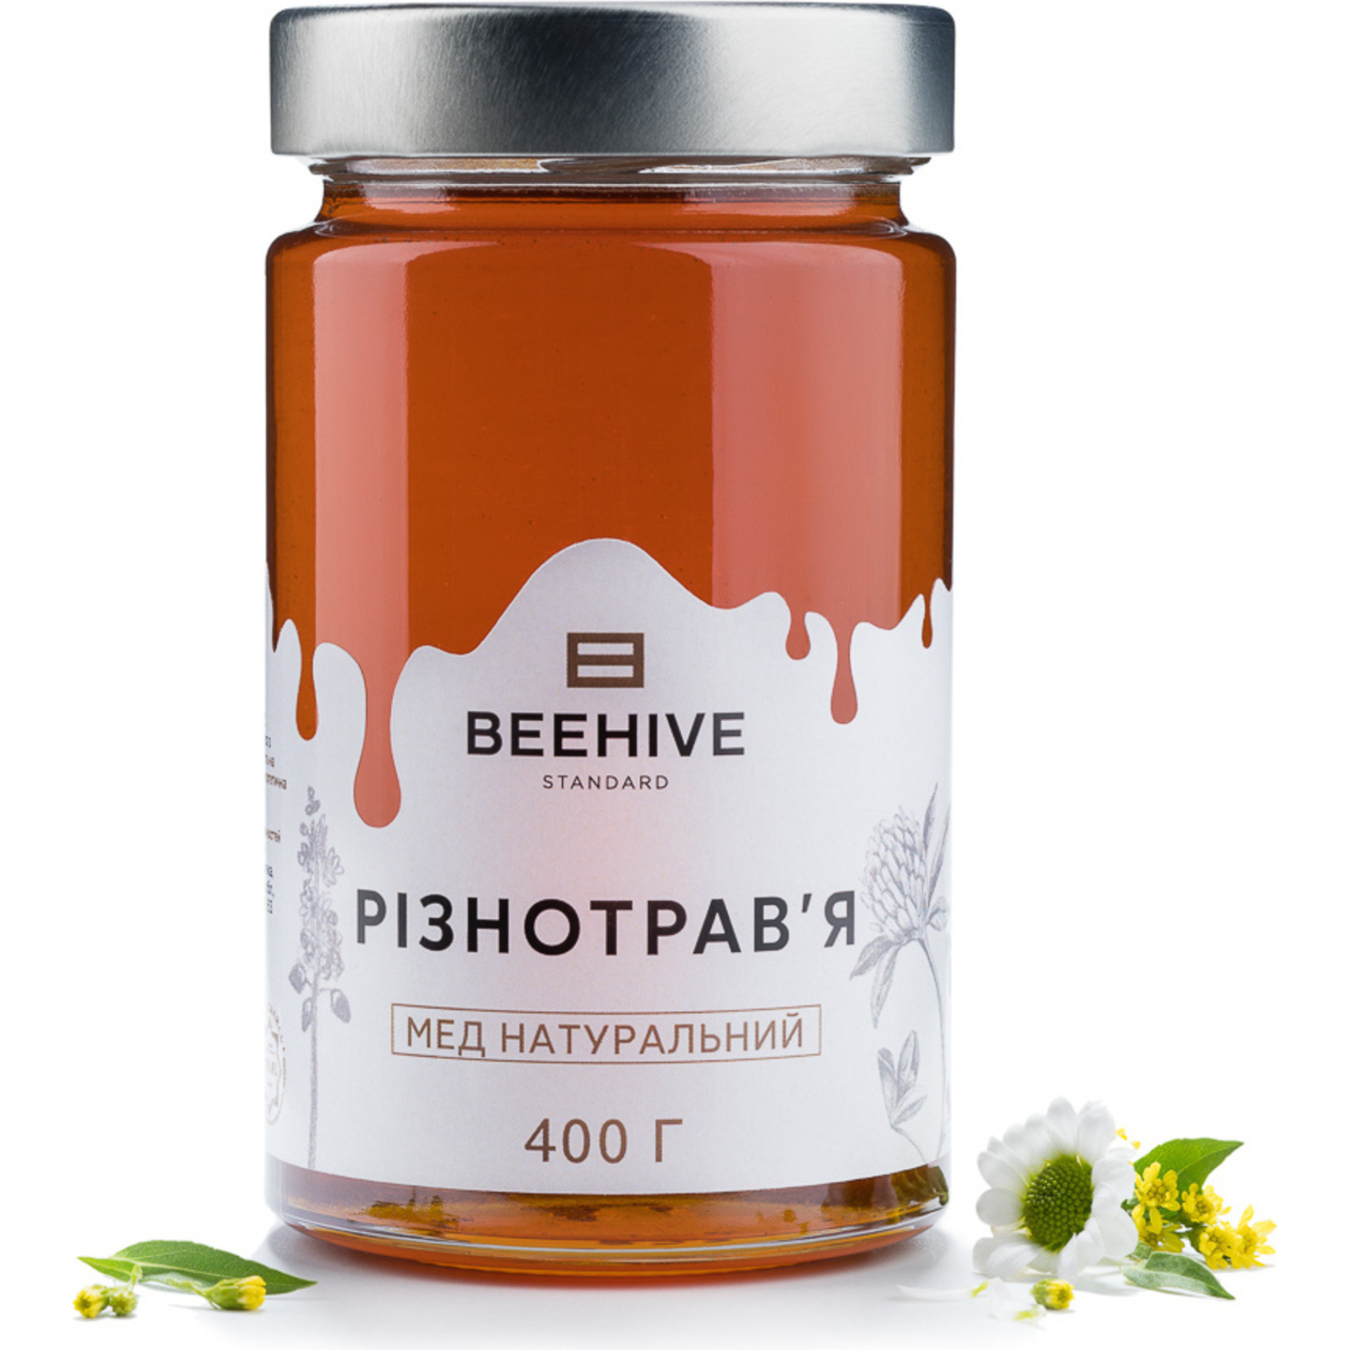 Honey Beehive Standard natural multi-herb glass jar 400g